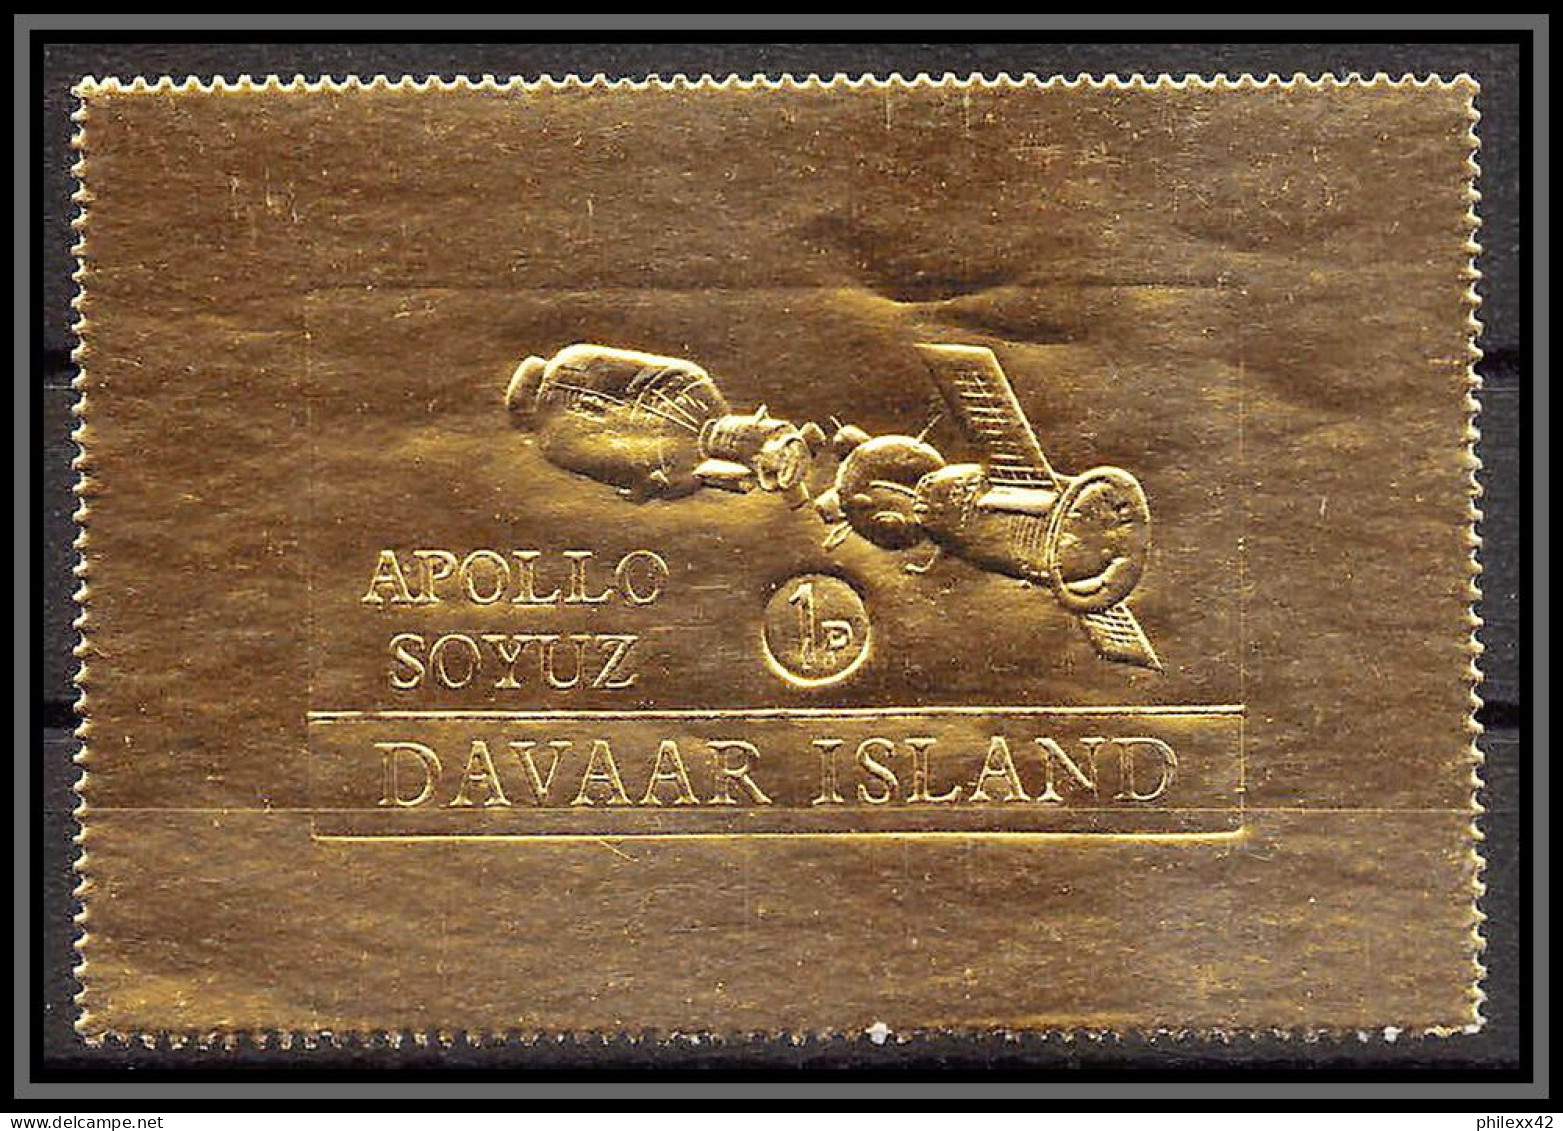 310b Davaar Scotland Apollo 1 P Soyuz (soyouz Sojus) Timbres OR Gold Stamps Géant Large - Scotland